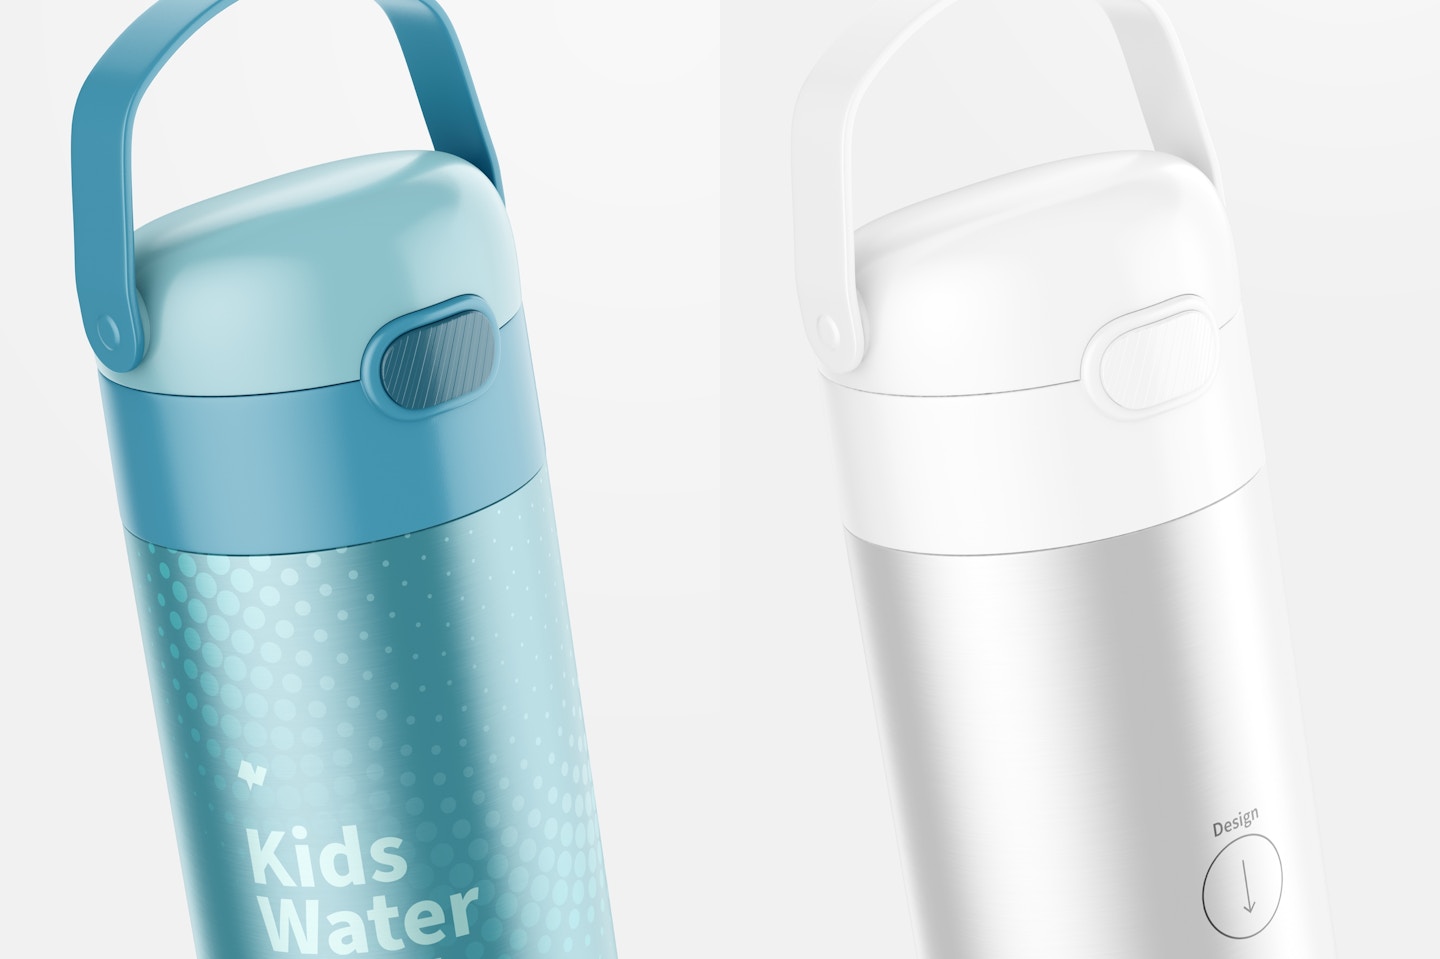 Maqueta de Botella de Agua para Niños de 12 oz, Acercamiento